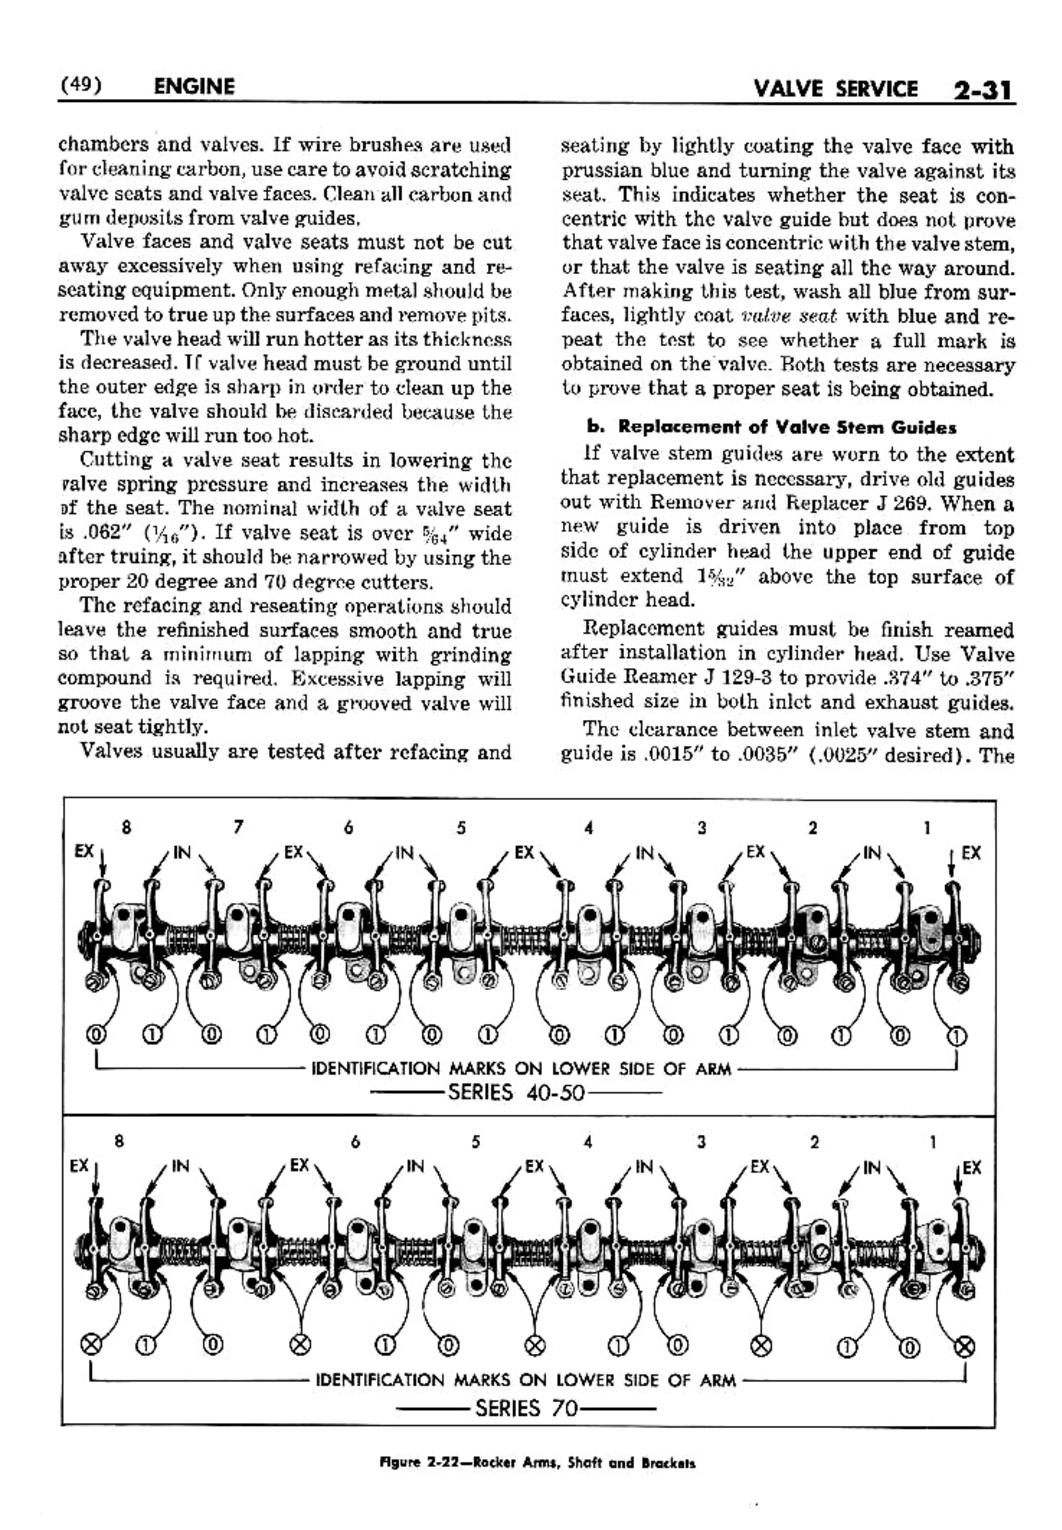 n_03 1952 Buick Shop Manual - Engine-031-031.jpg